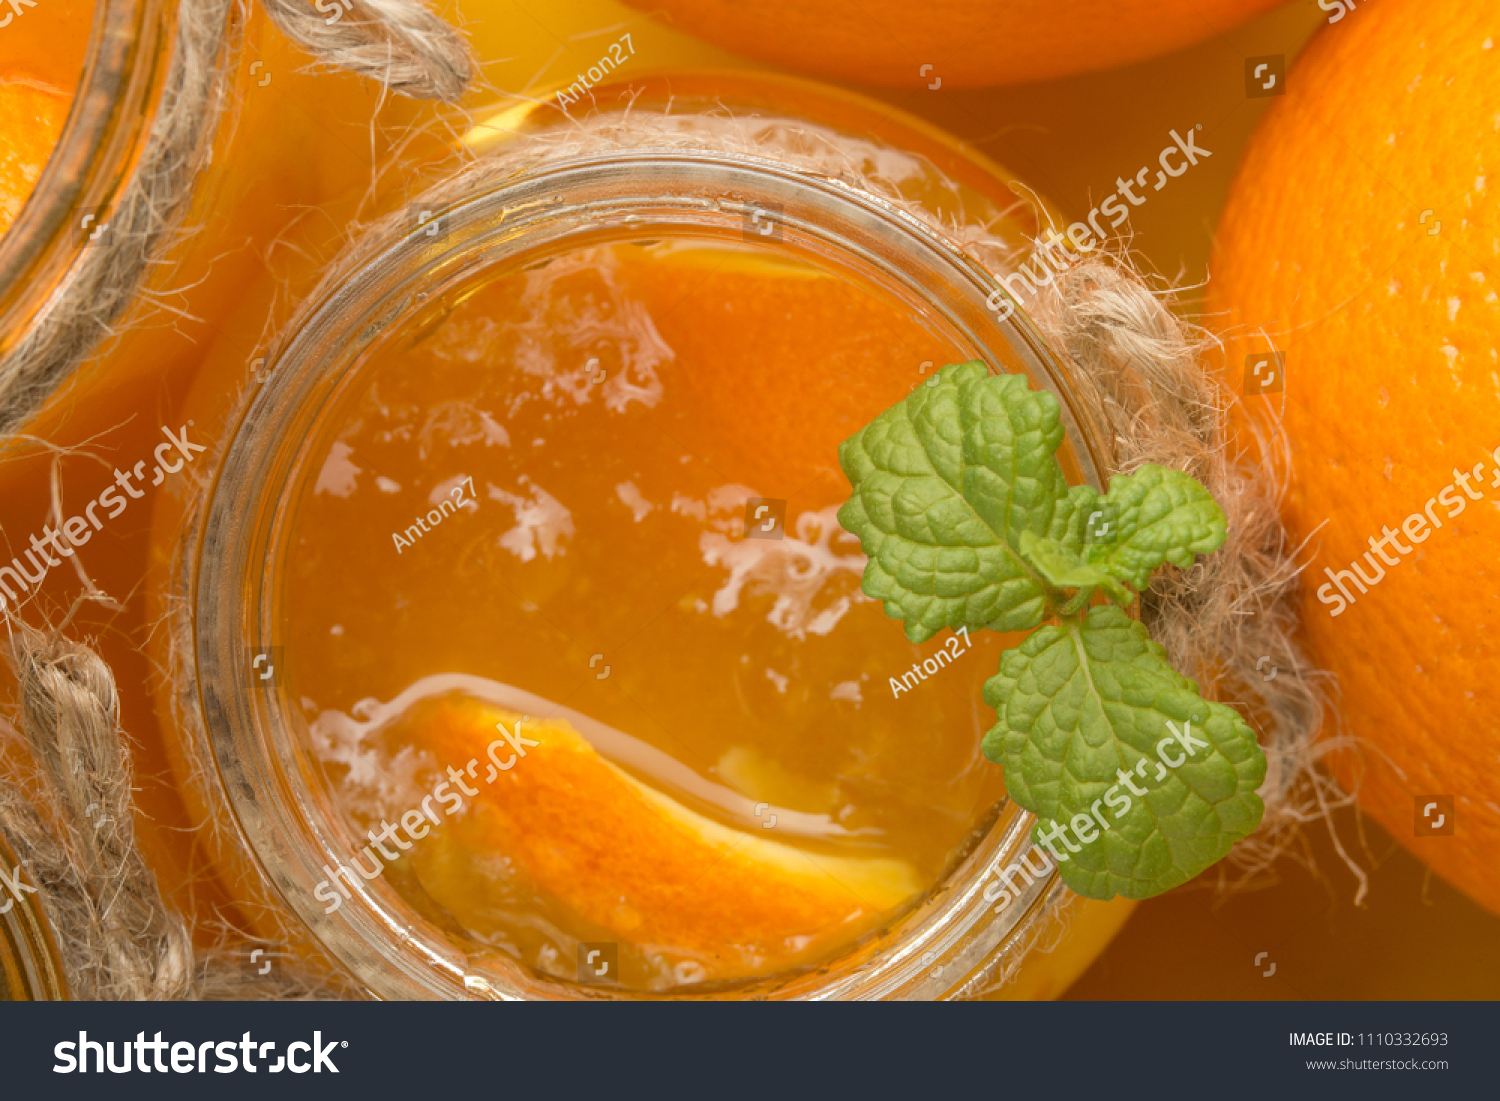 Download Orange Jam Glass Jar On Yellow Stock Photo Edit Now 1110332693 Yellowimages Mockups